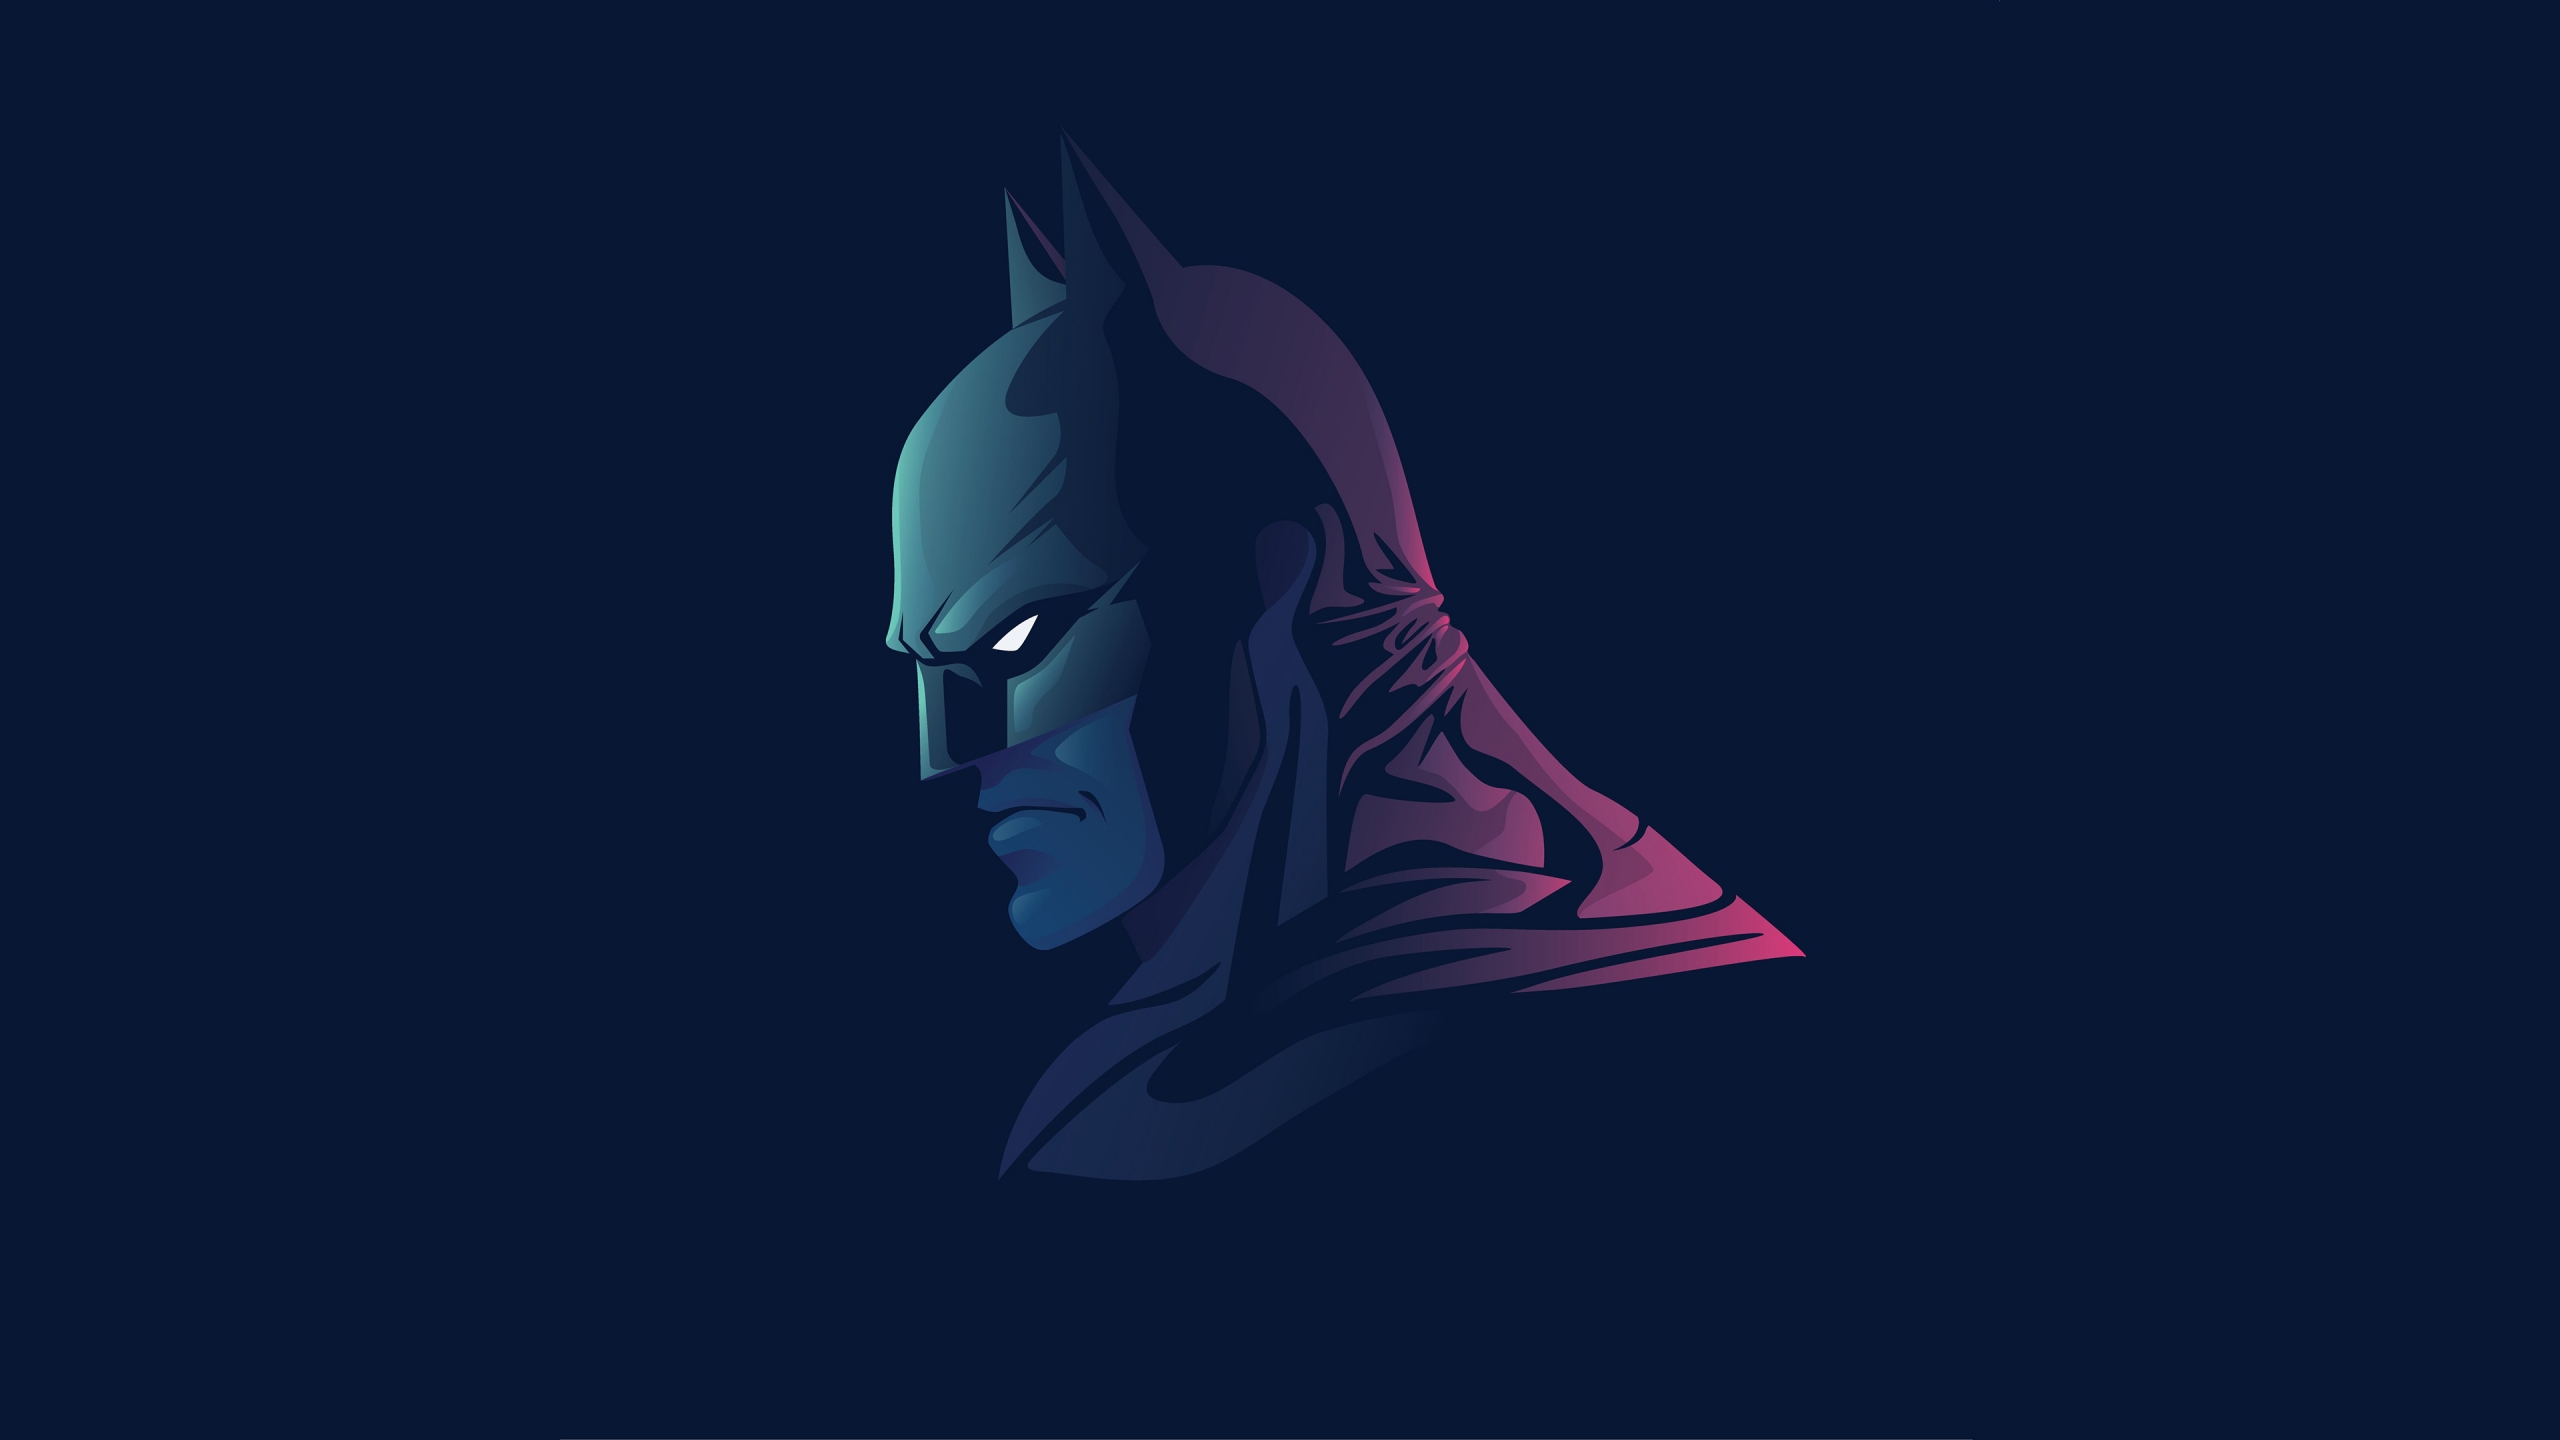 General 2560x1440 artwork minimalism DC Comics vector art simple background digital art Batman